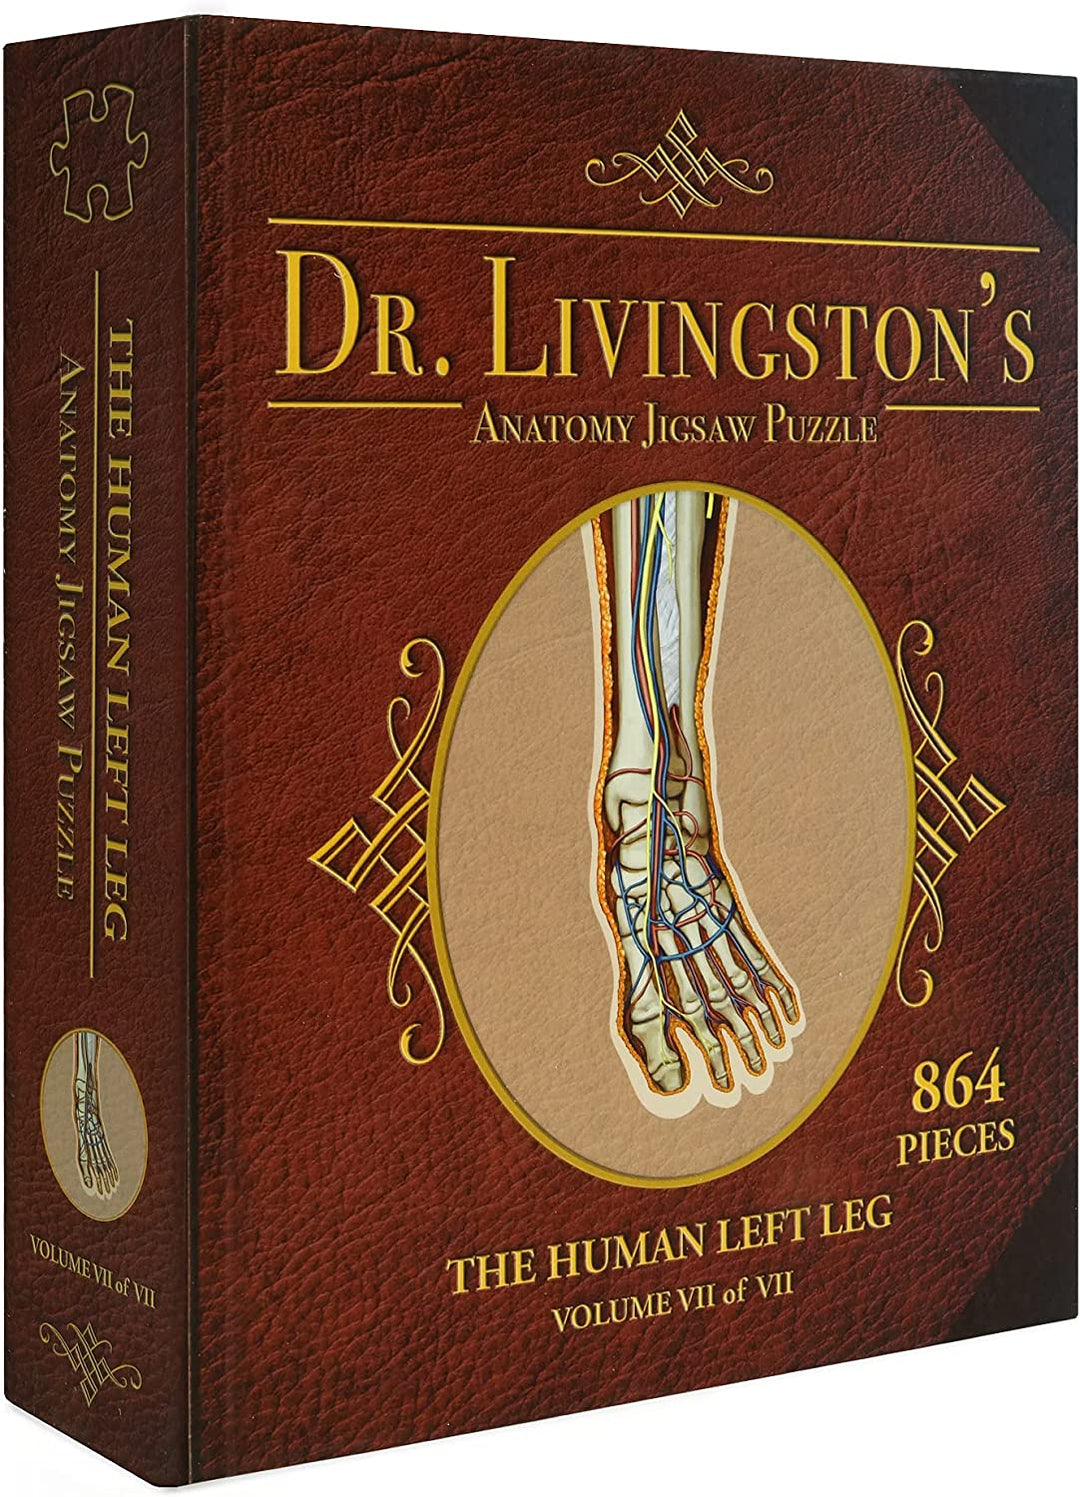 Dr Livingston's Anatomy Jigsaw Buzzle: Volume IV - The Human Left Leg